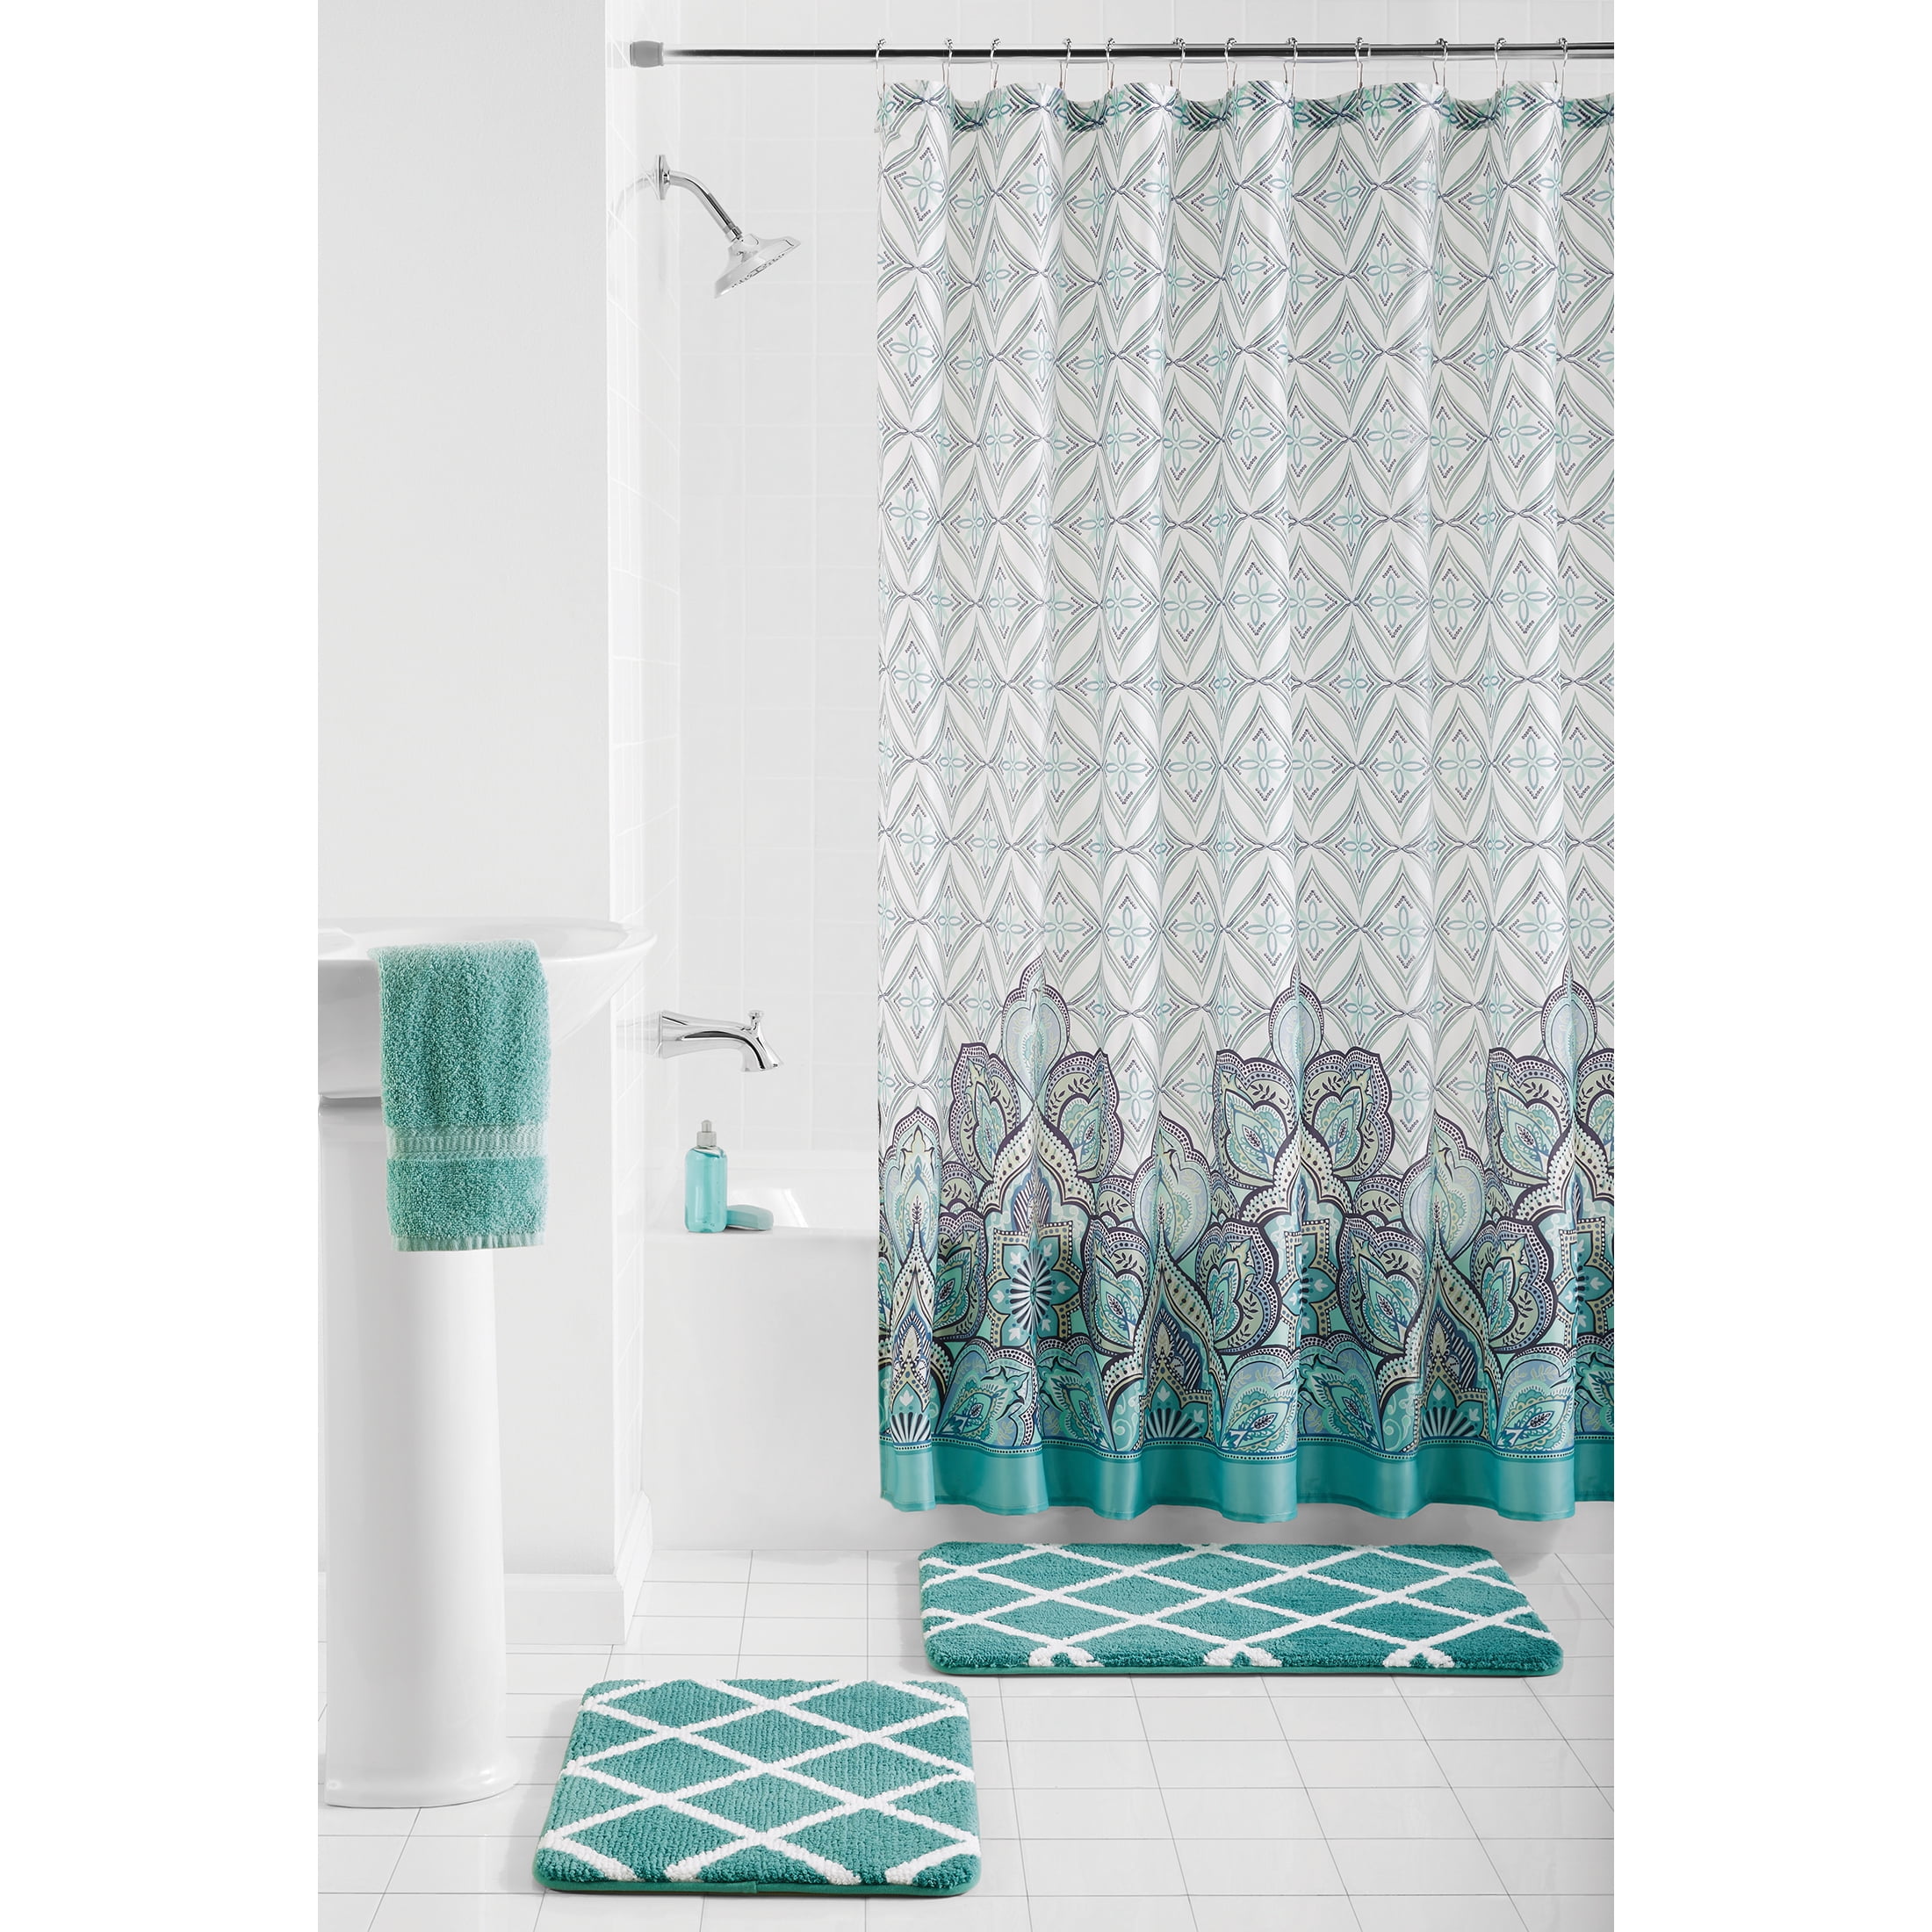 72x72" Shower Curtain Bathroom Waterproof Fabric w/ 12 Holes Route US 66 Car 215 